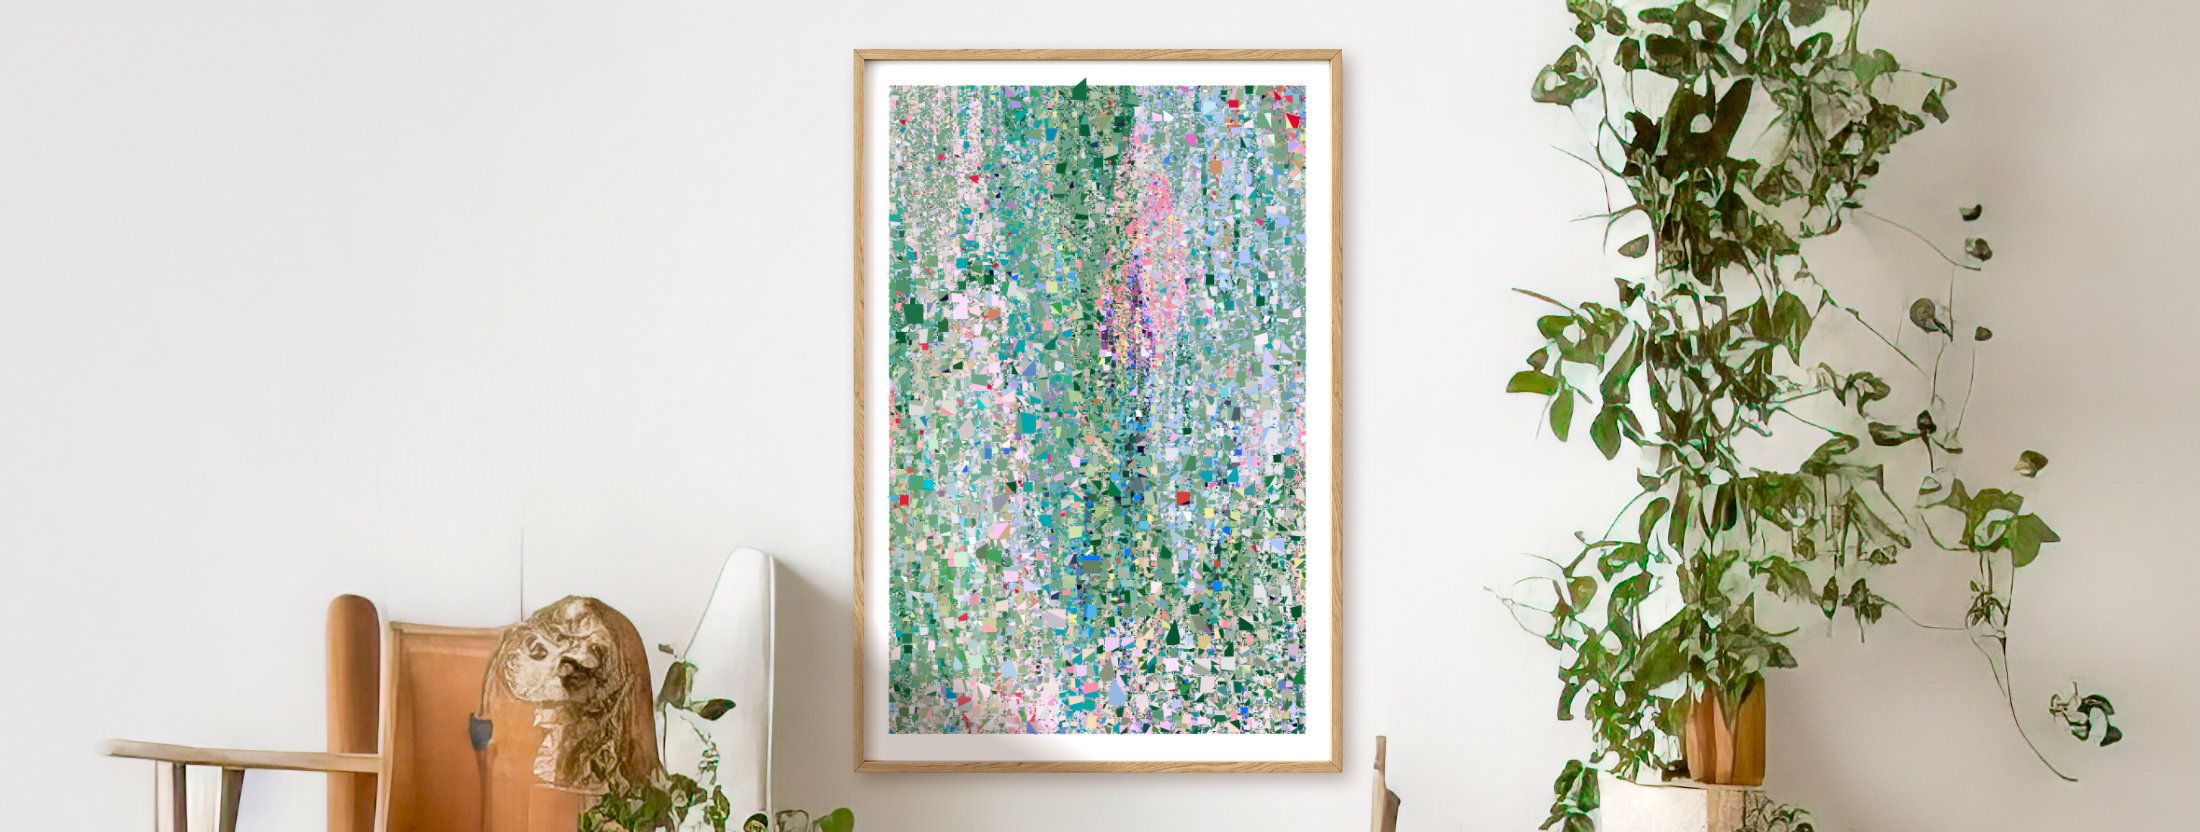 A framed wisteria print on a living room wall